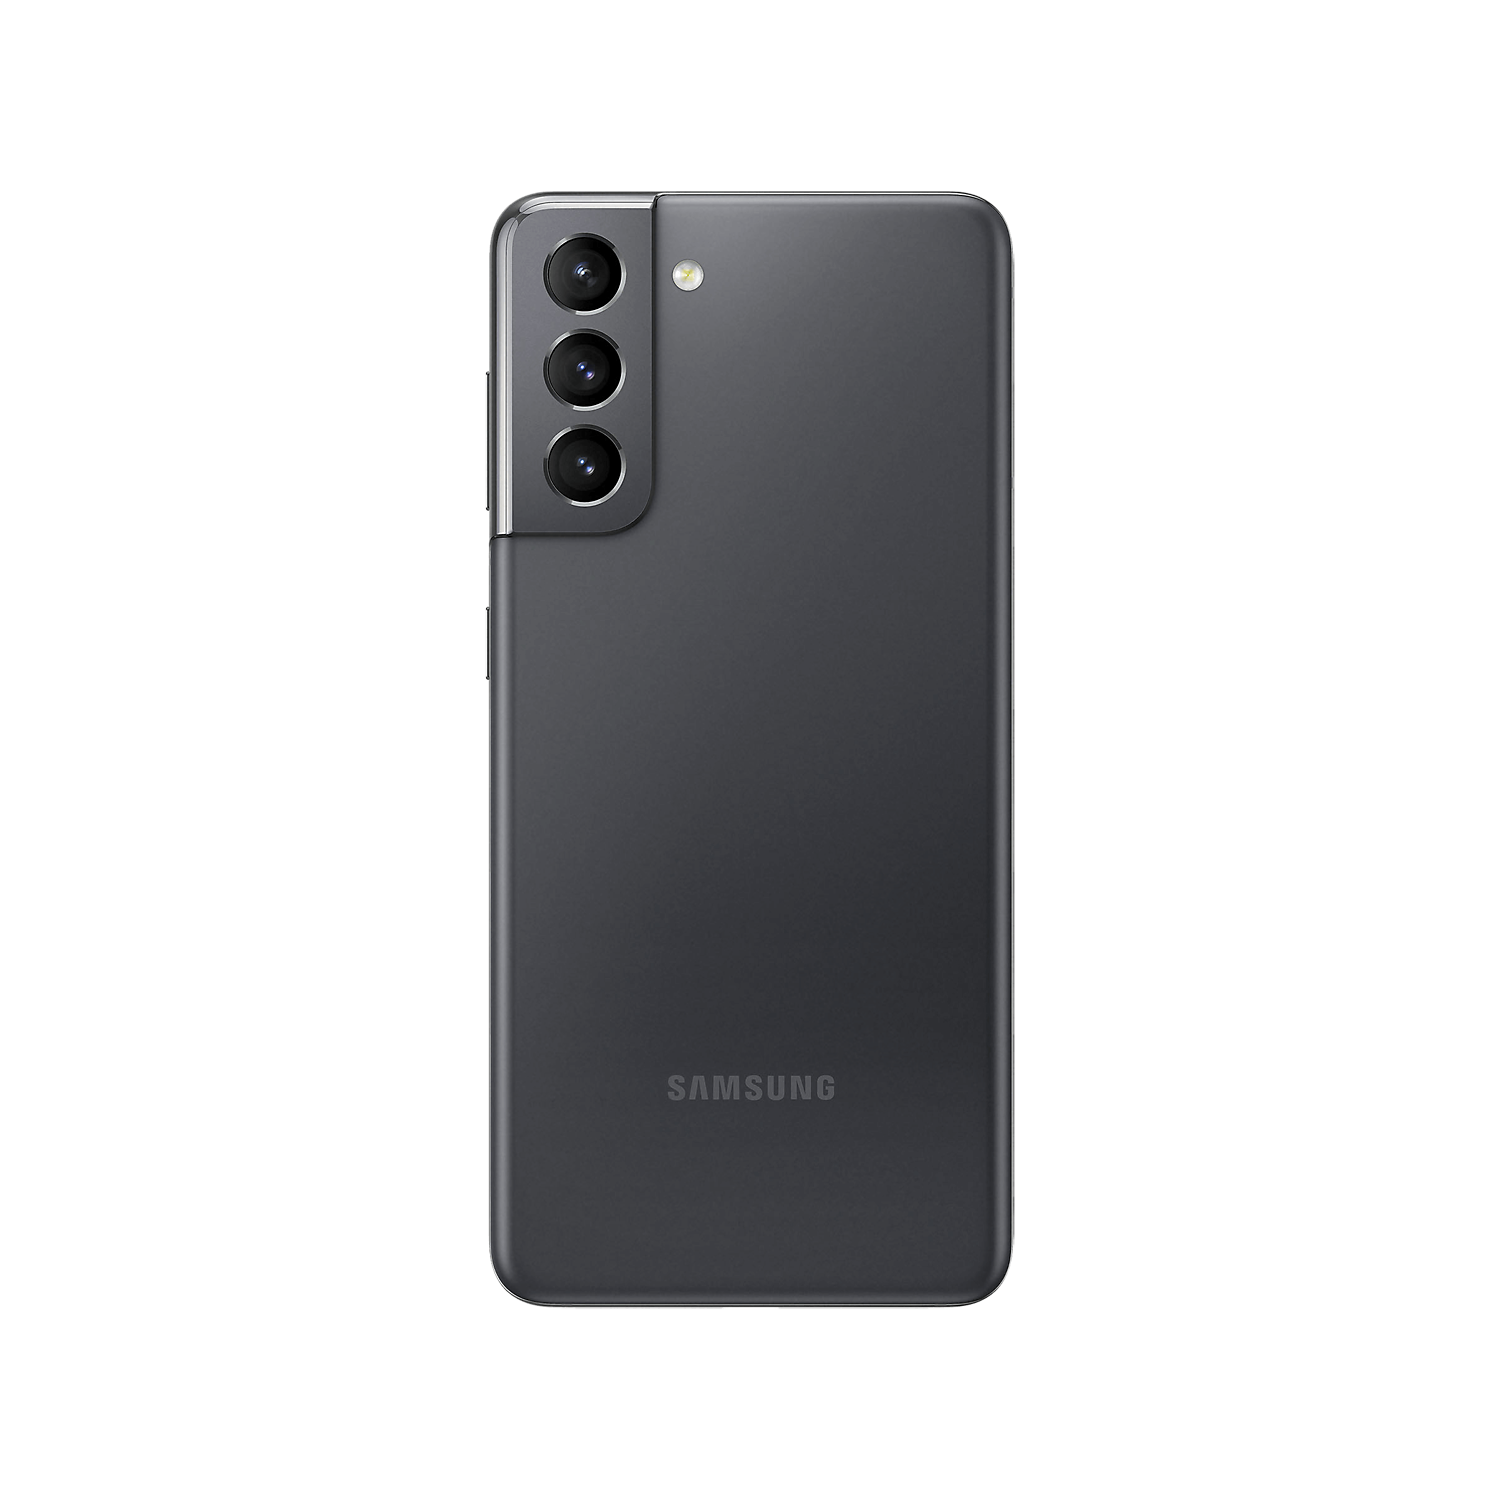 Samsung Galaxy S21, 5G, 128GB, Phantom Grey, Unlocked - Good Condition